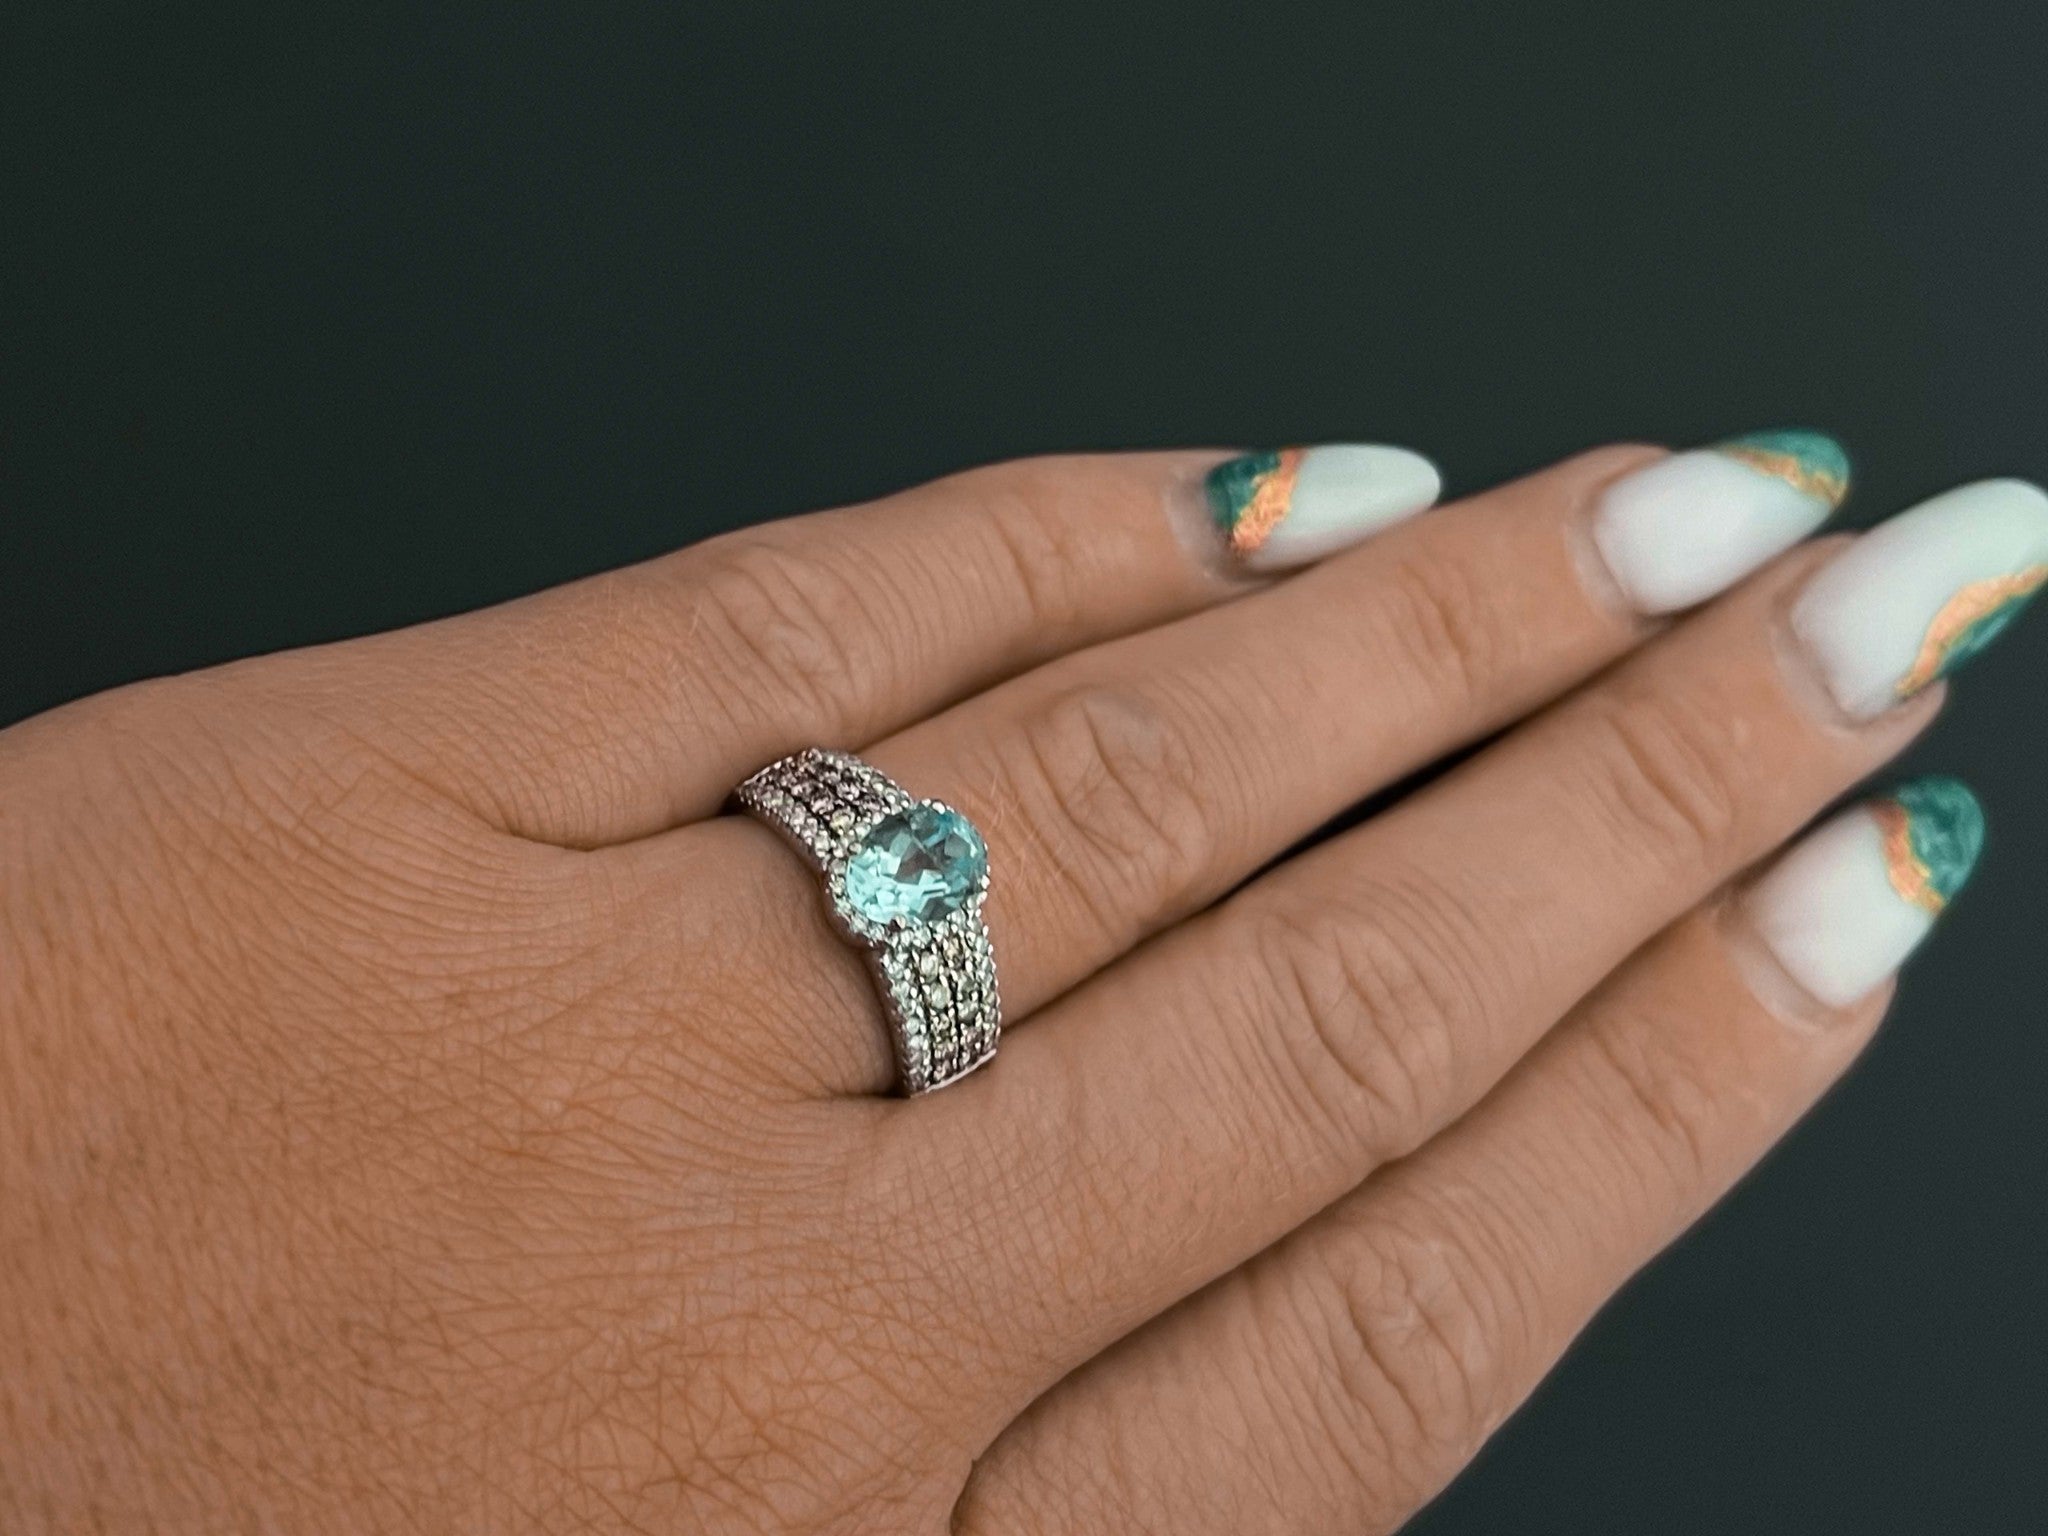 LeVian Aquamarine and Diamond Statement Ring in 14k White Gold